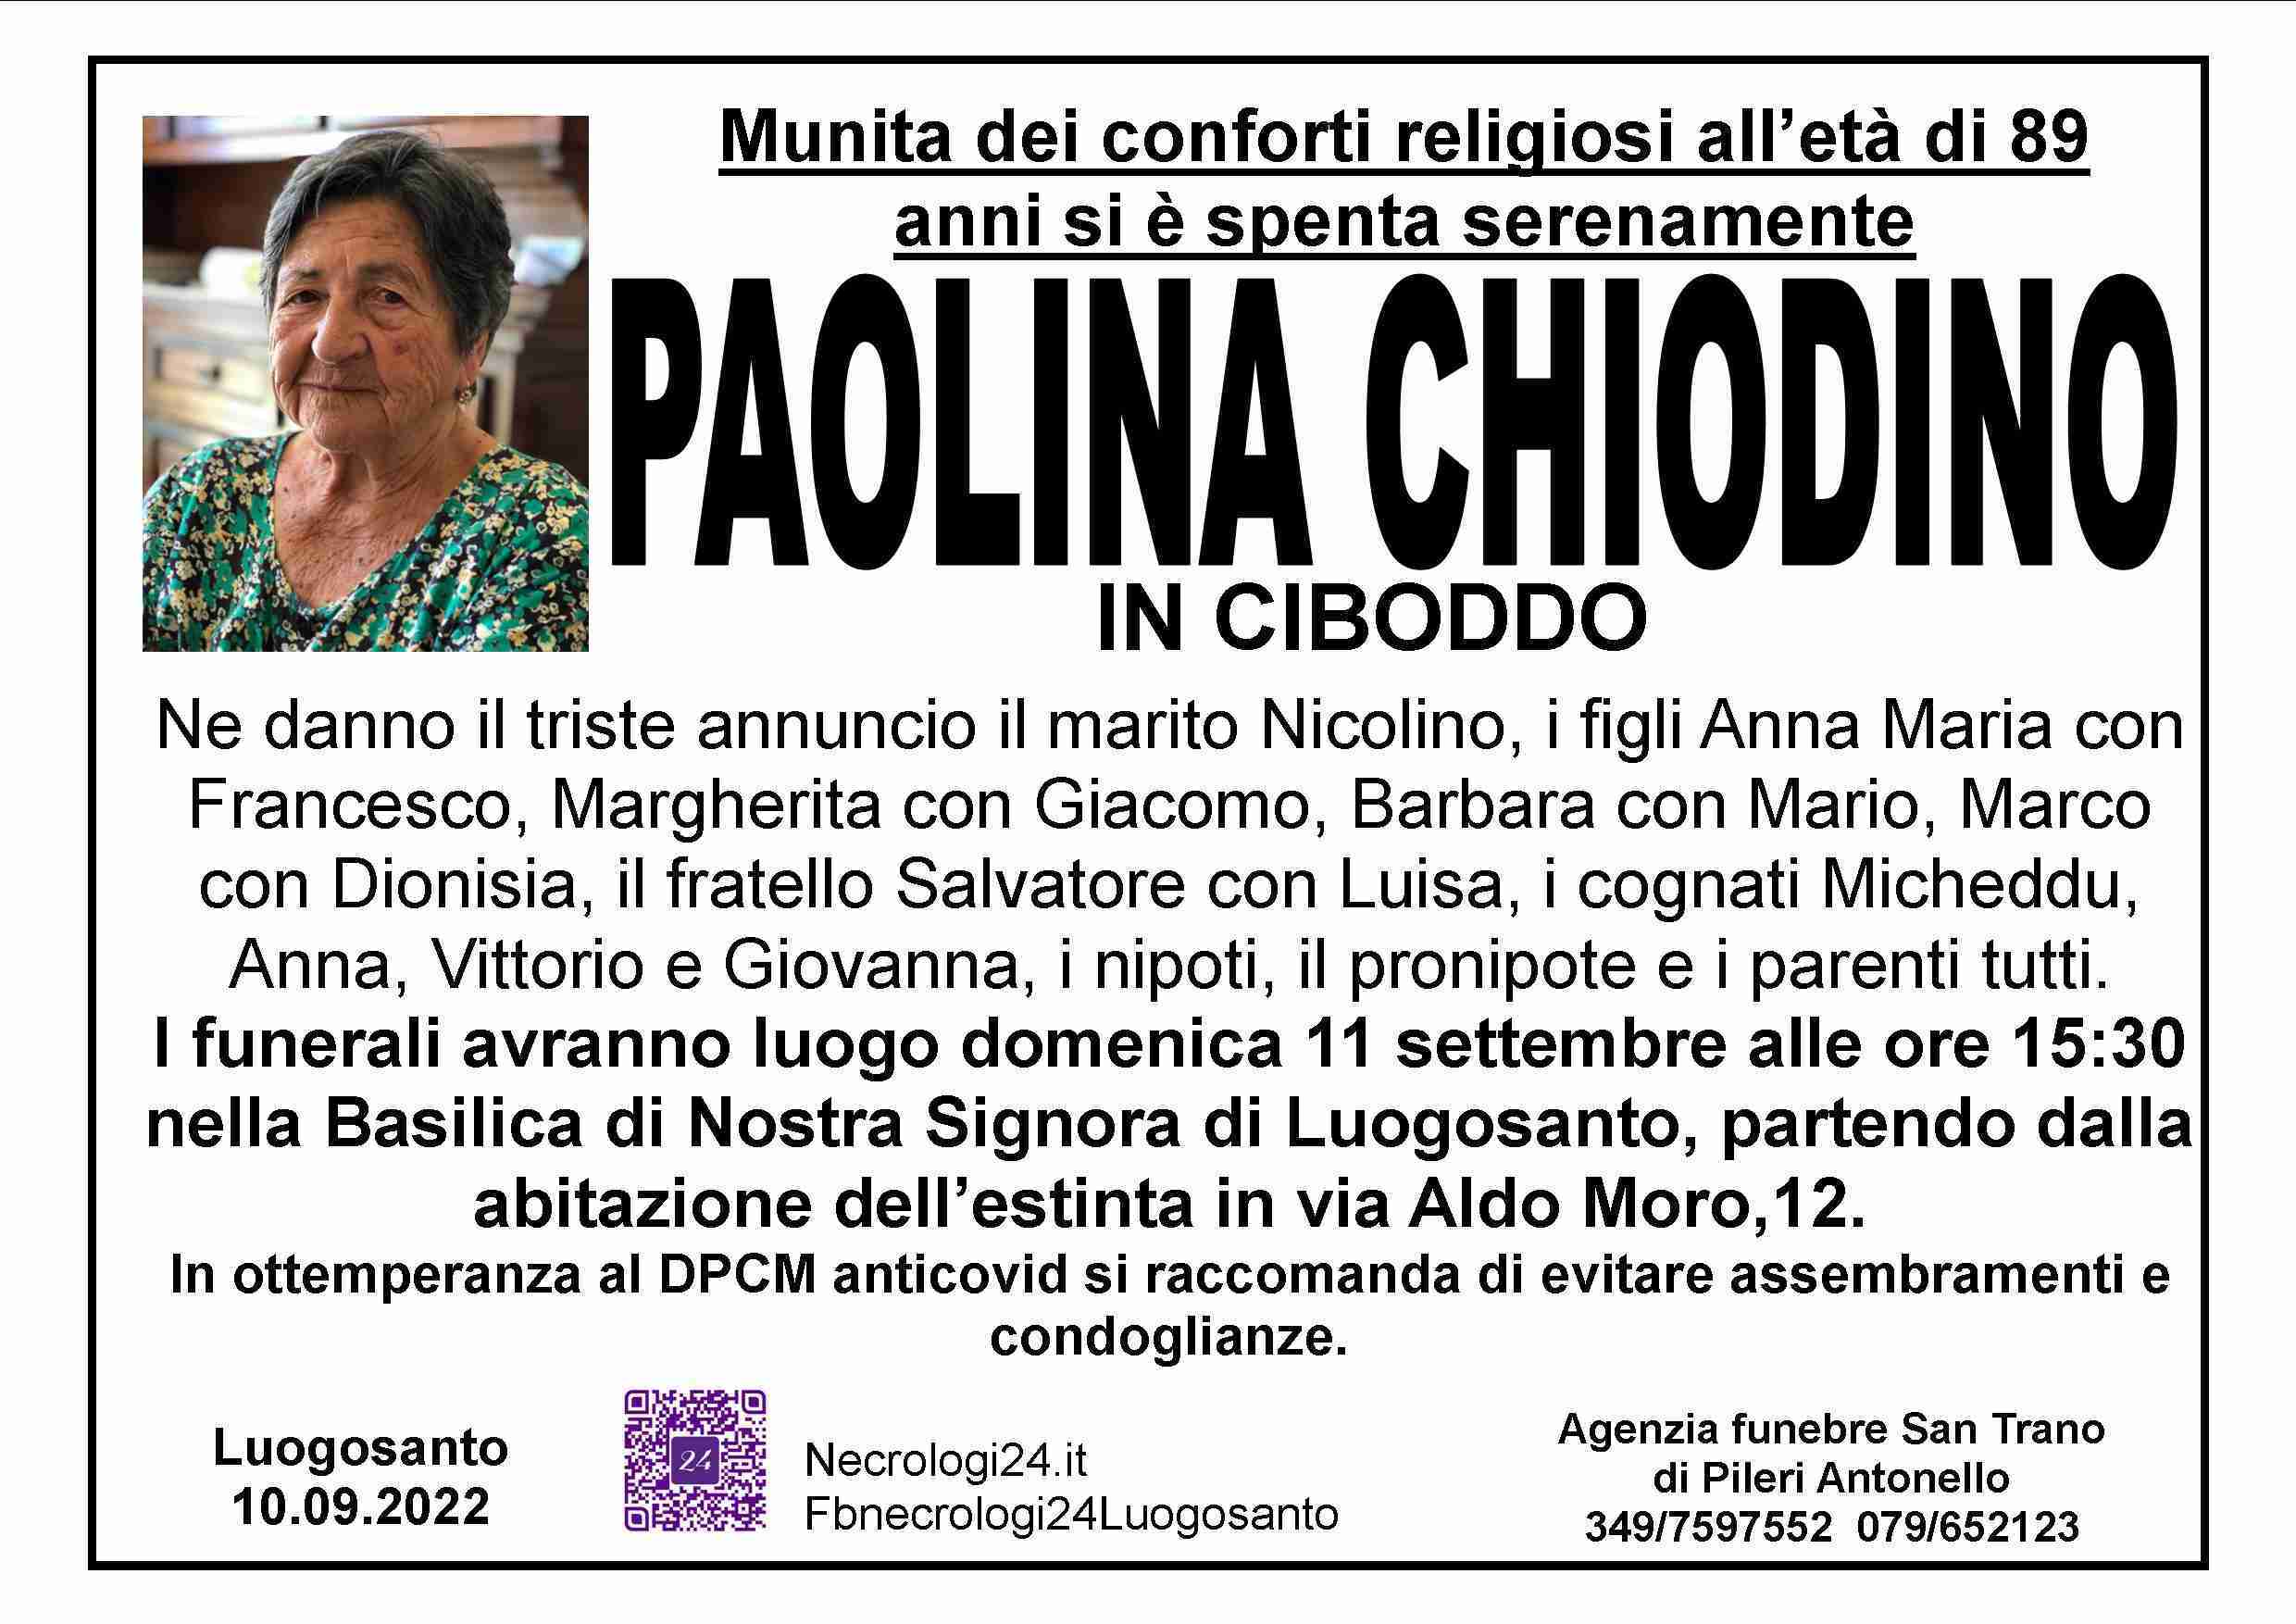 Paolina Chiodino